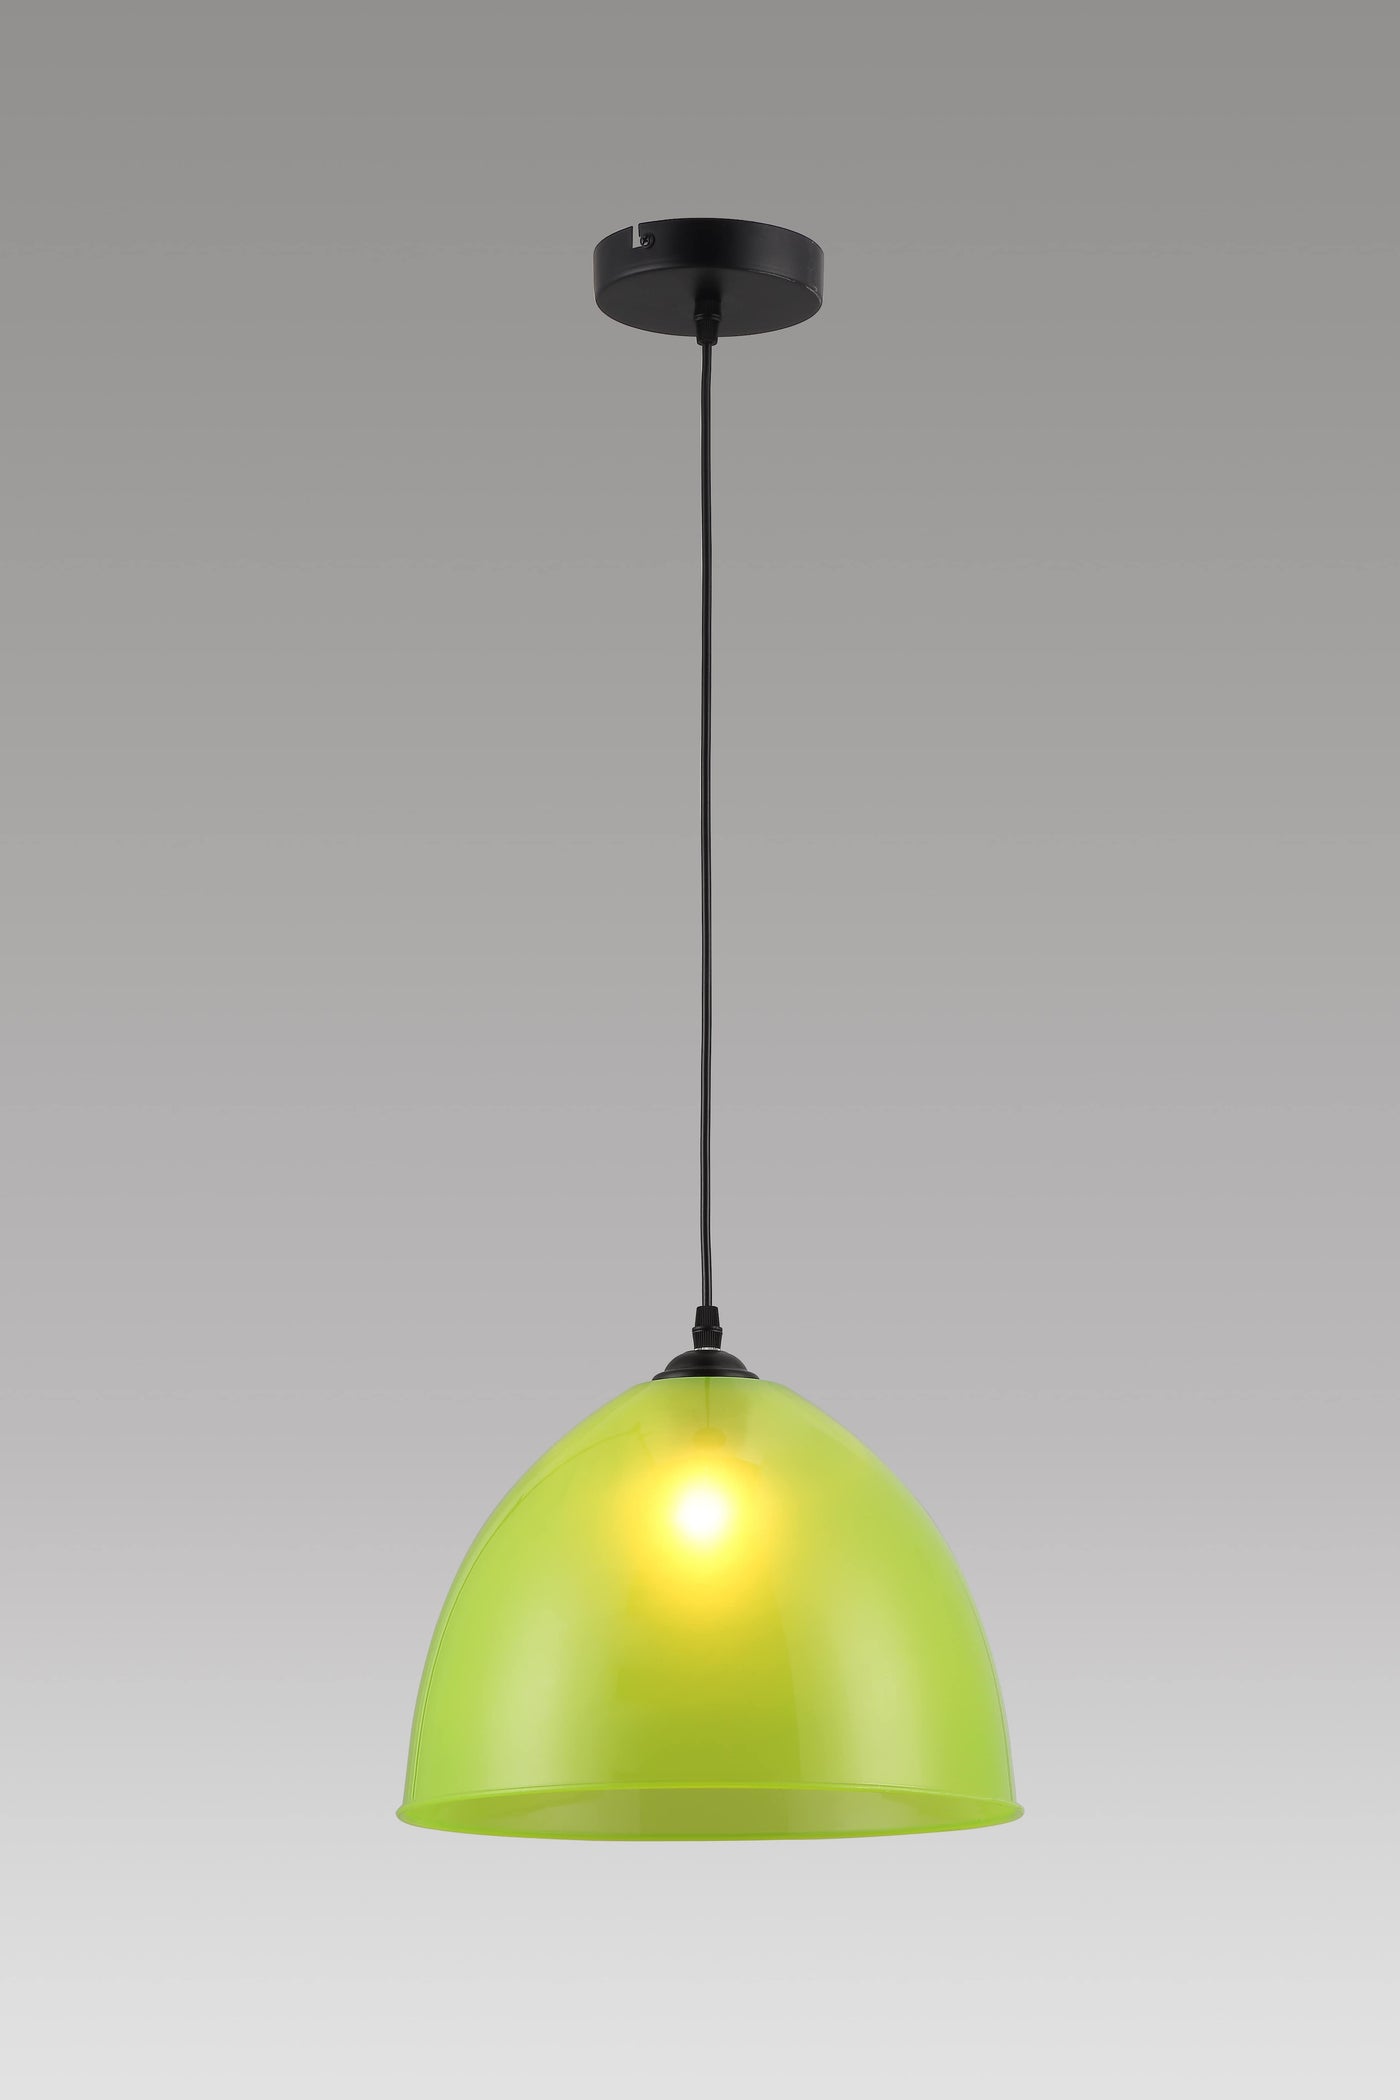 CUPO Green Acrylic Pendant - Stello Light Studio